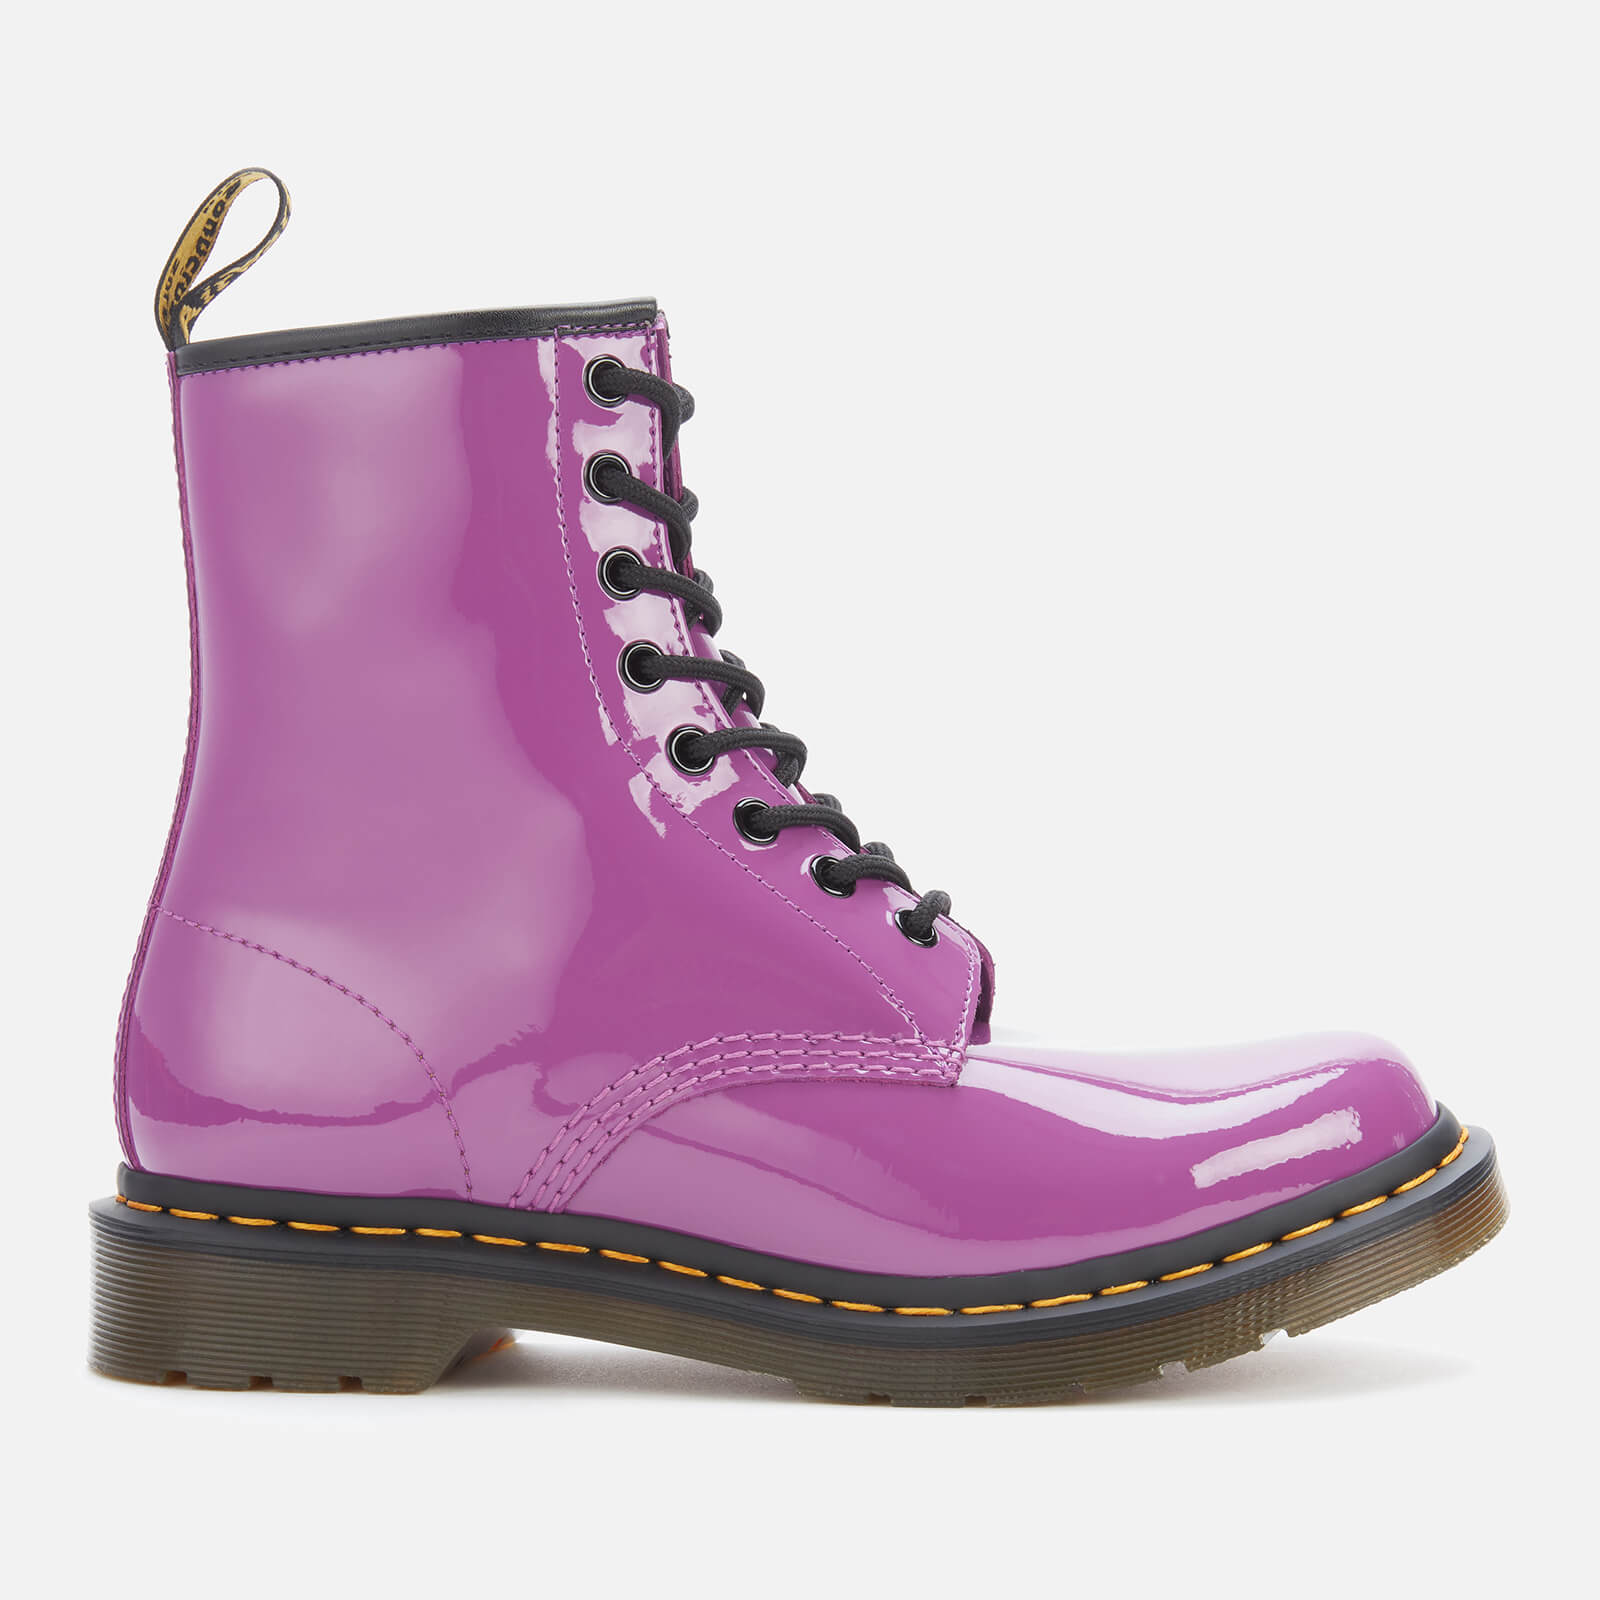 Dr. Martens Women's 1460 Patent Lamper 8-Eye Boots - Bright Purple - UK 3